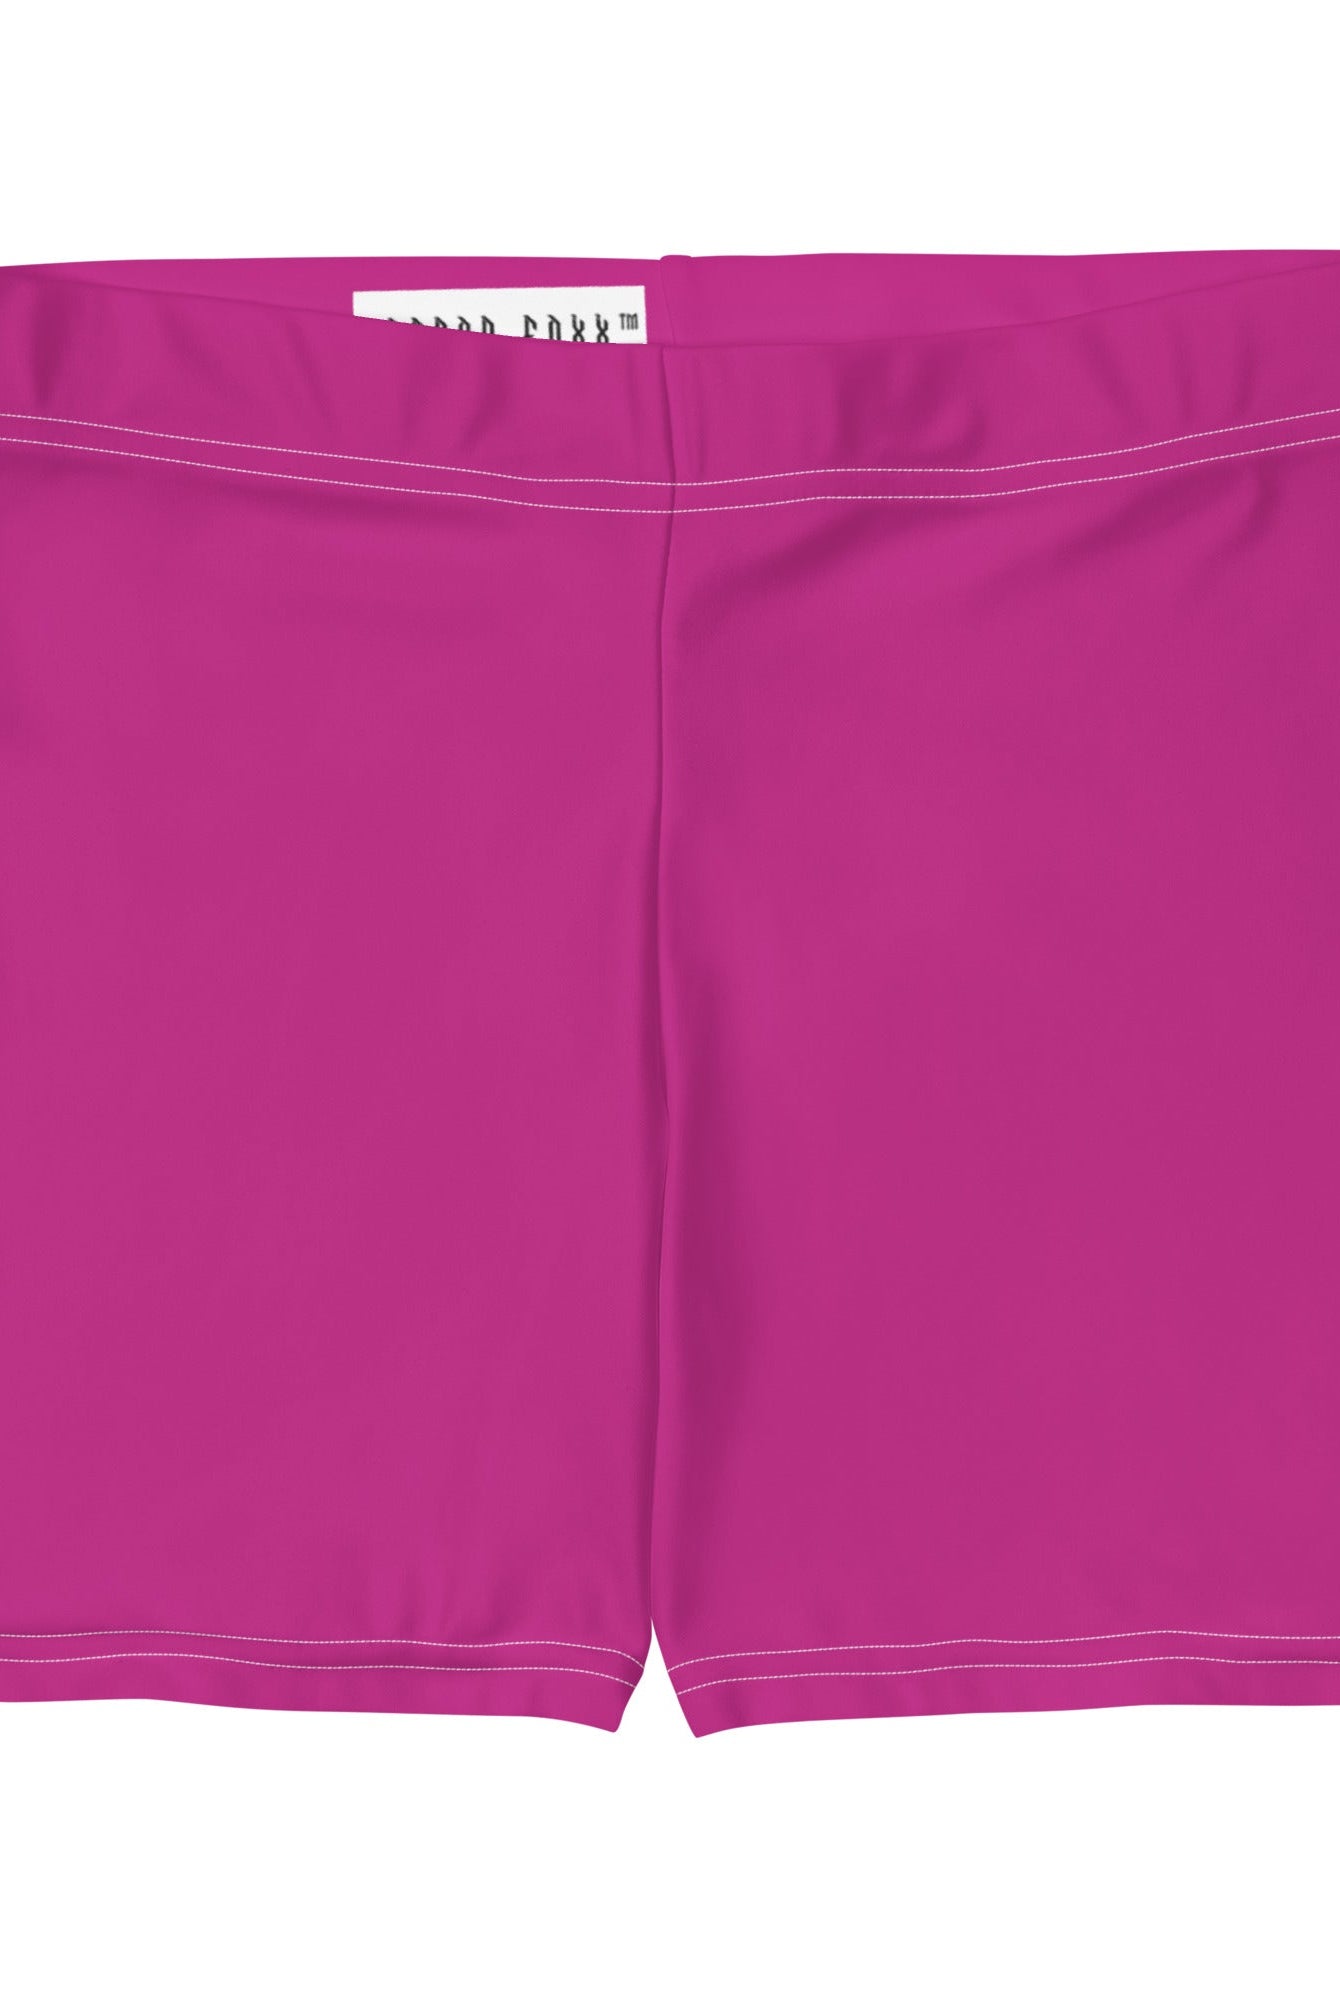 Medium Red Violet Gym Shorts - Women's Gym Shorts - DRAGON FOXX™ - Medium Red Violet Gym Shorts - 1695073_9296 - XS - Medium Red Violet - Gym Shorts - Dragon Foxx™ - Dragon Foxx™ Gym Shorts - Dragon Foxx™ Medium Red Violet Gym Shorts